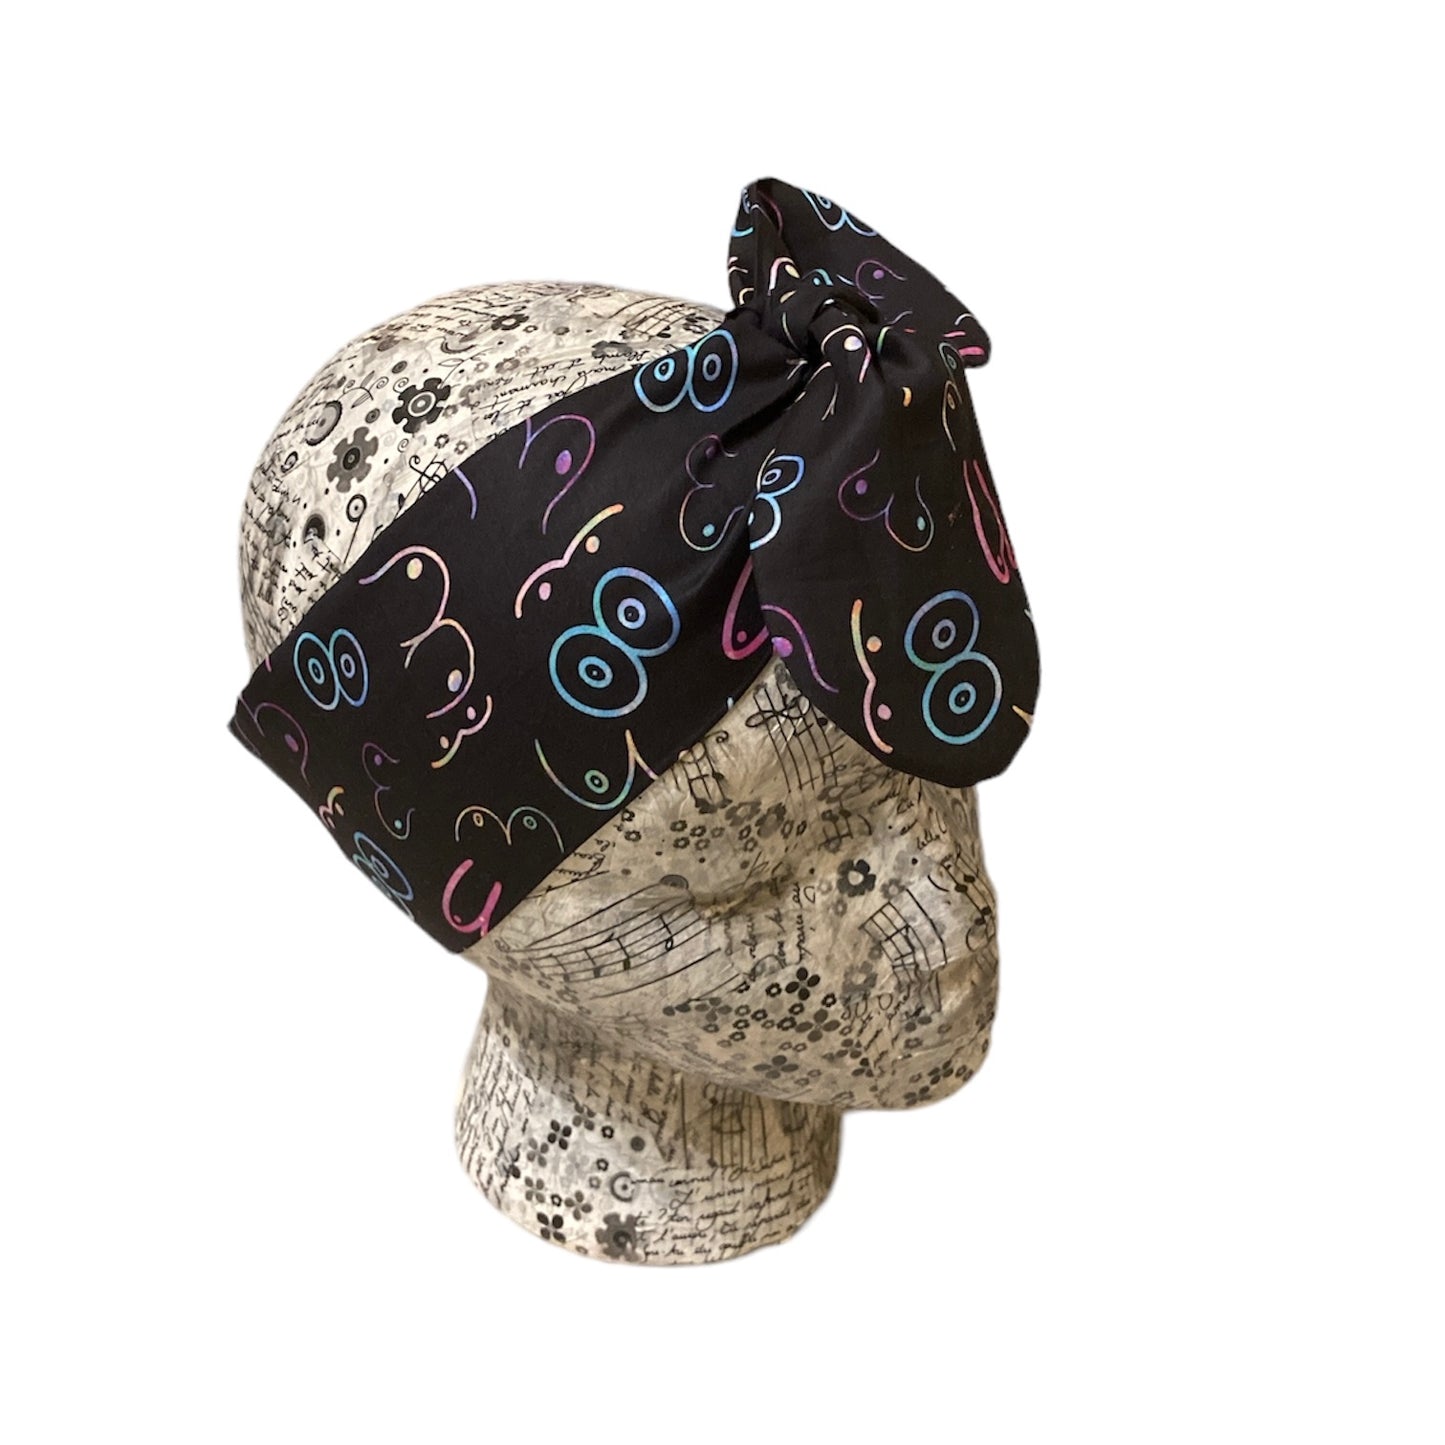 Neon Boob design self tie headband